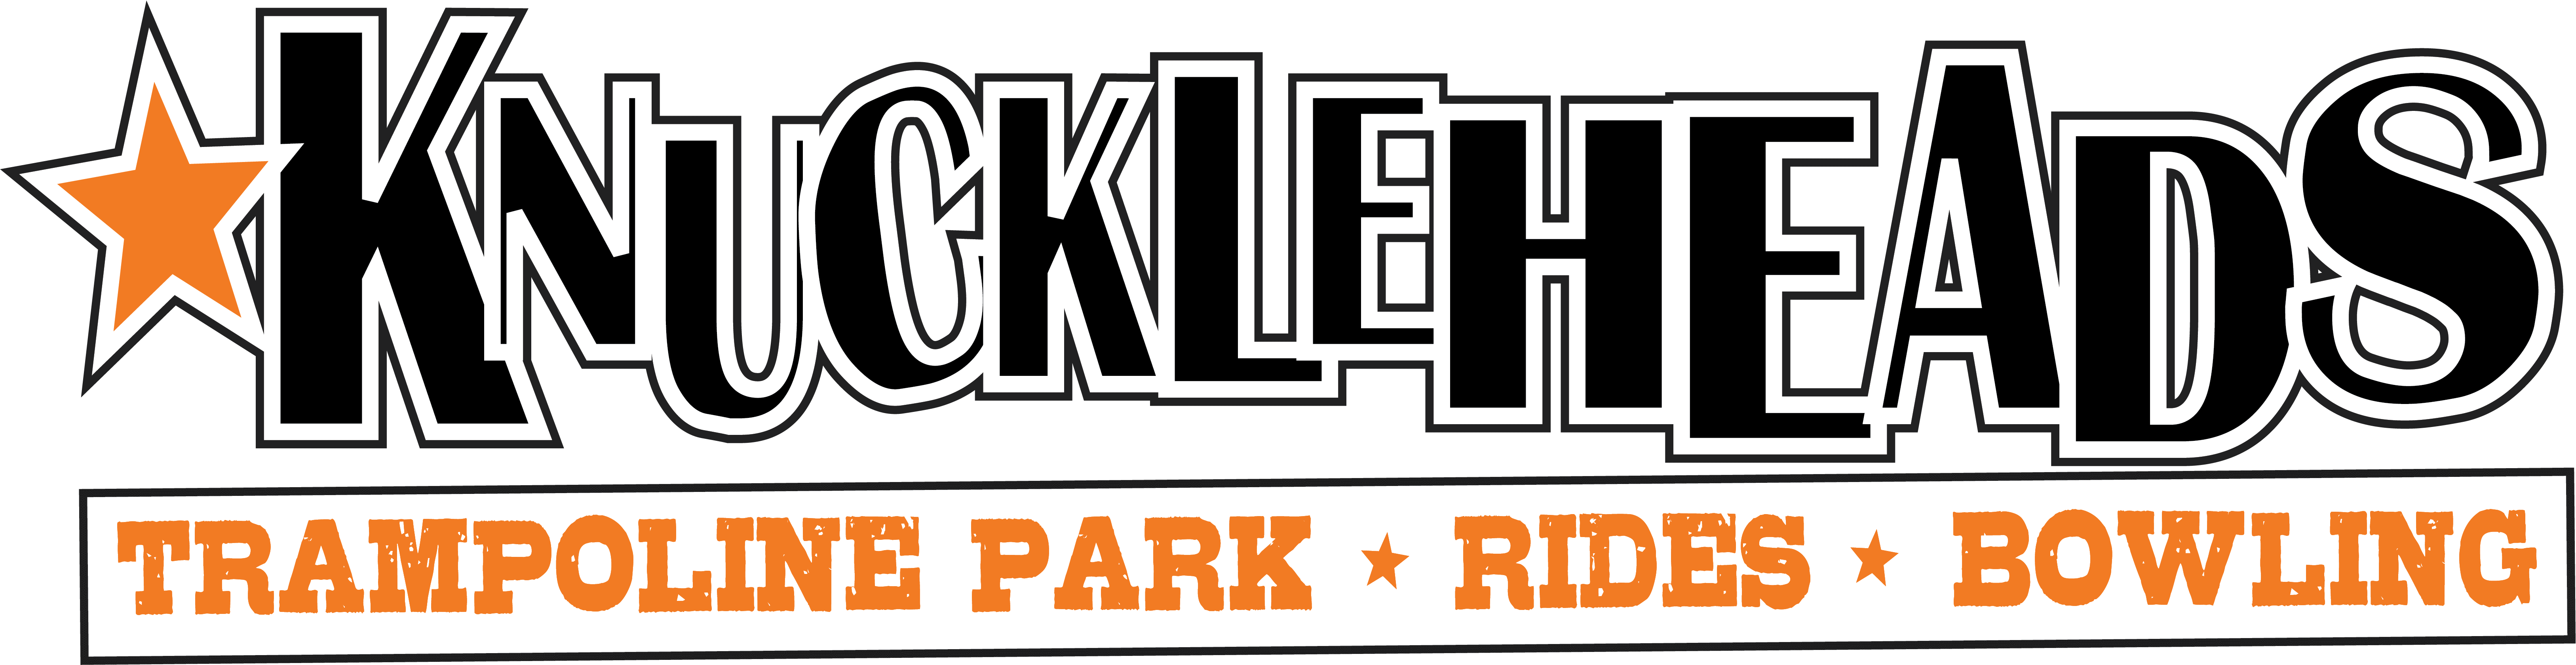 Knuckleheads Adventure Park